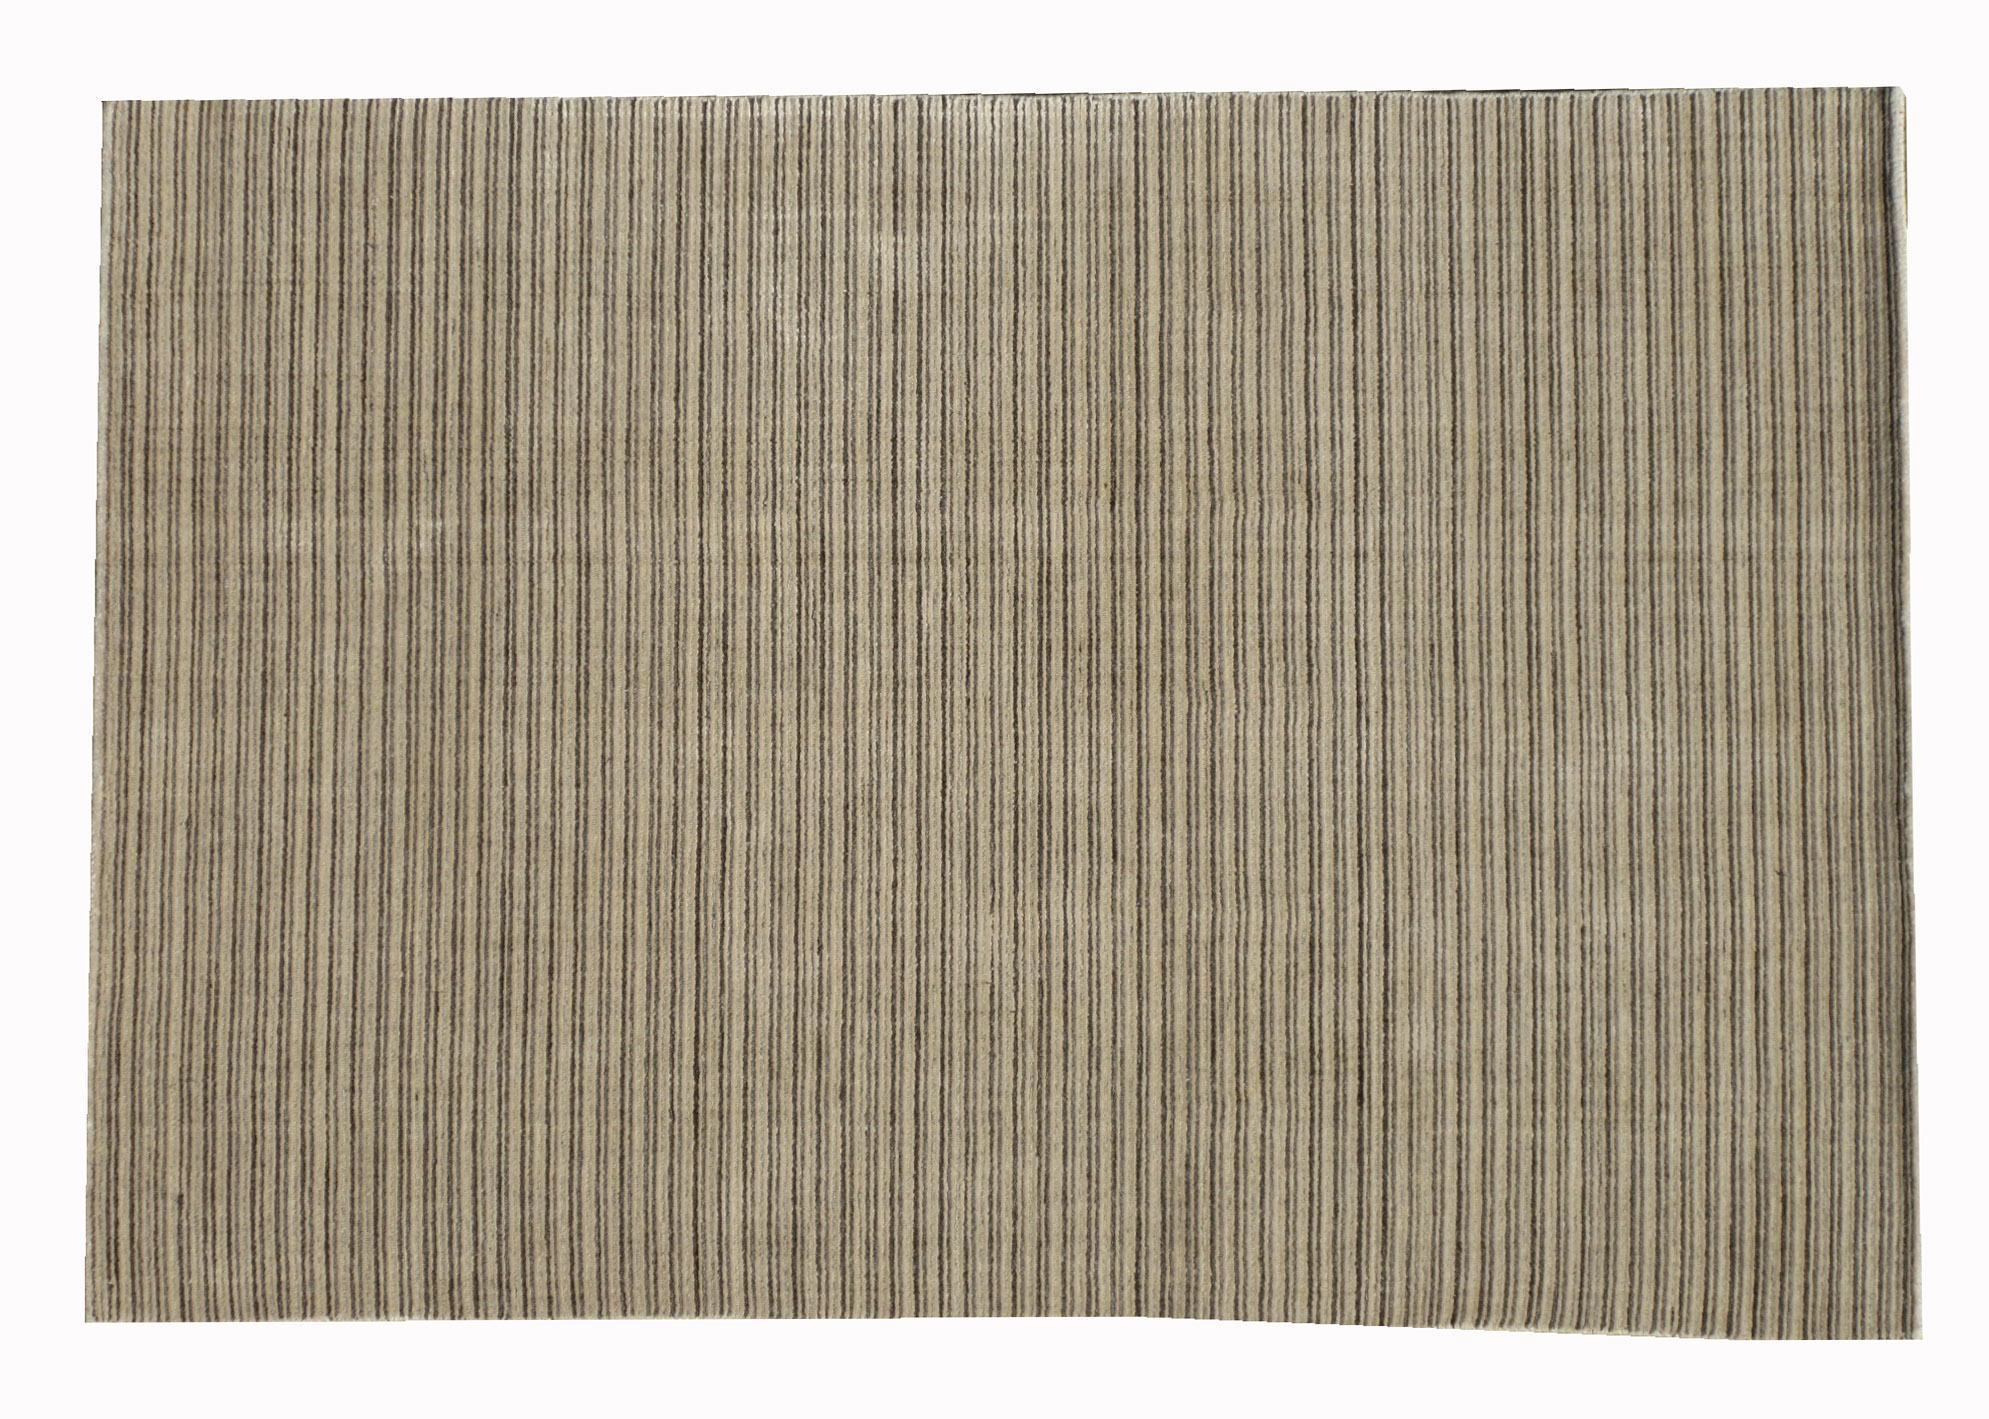 Handmade silk pile on a cotton foundation.

Dimensions: 4' x 5'11